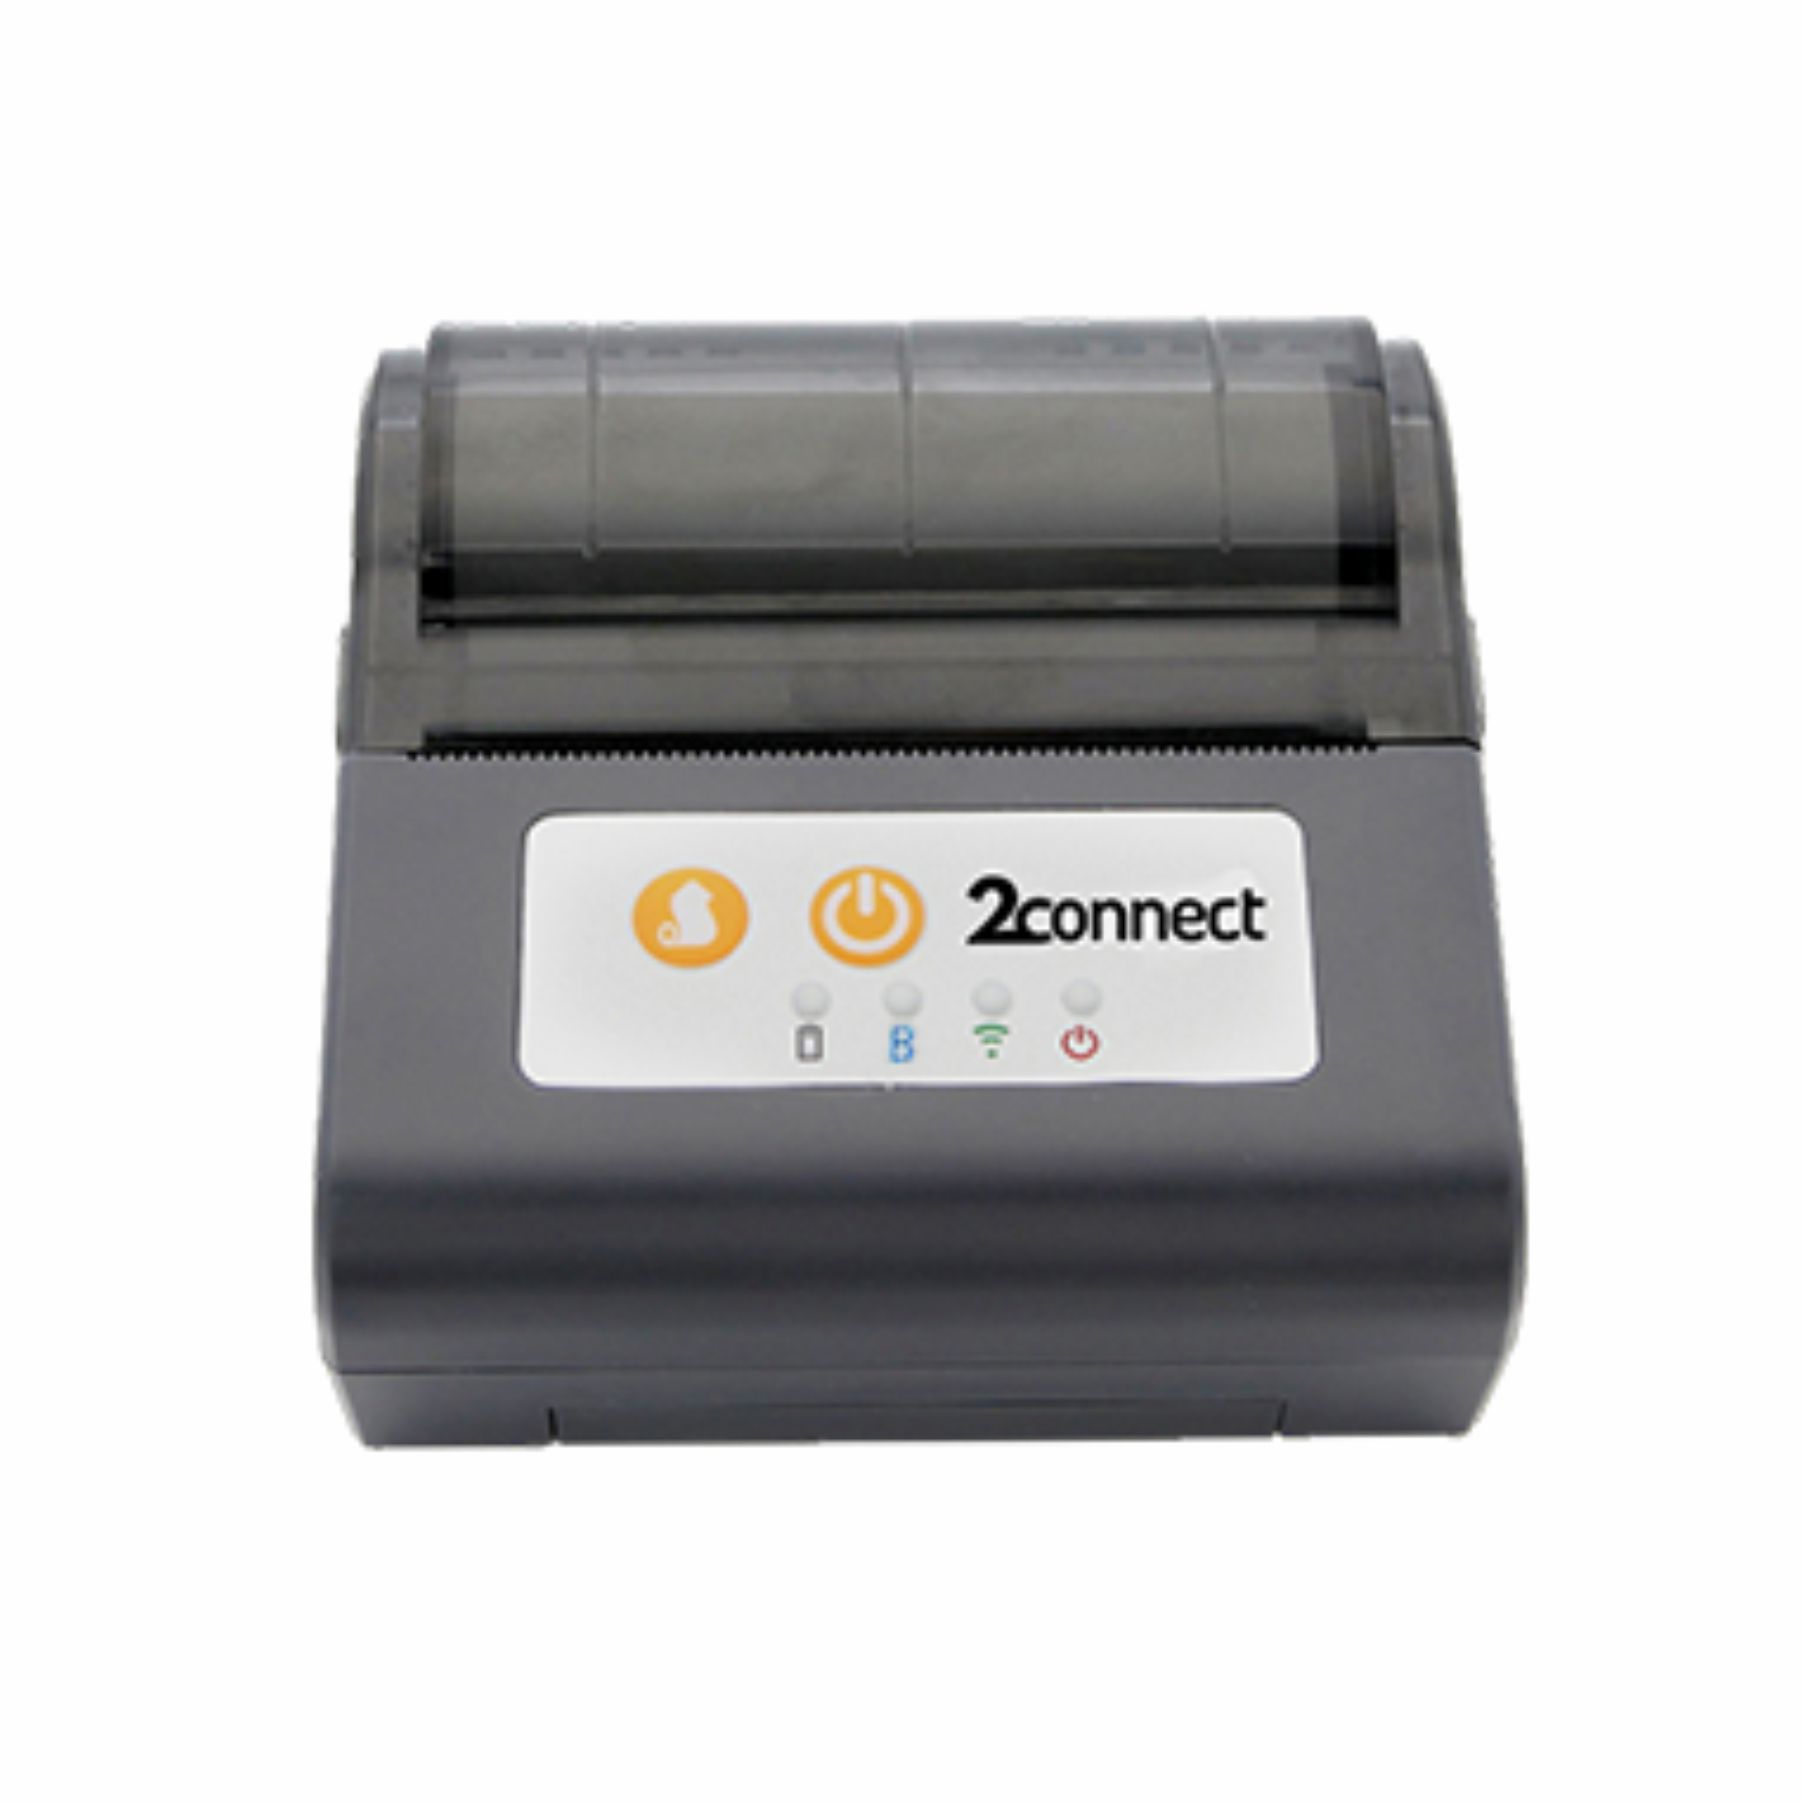 Impresora 2CONNECT PRINTER 58MM TERMICO Bluetooth Punto de Venta 2C-P58-C